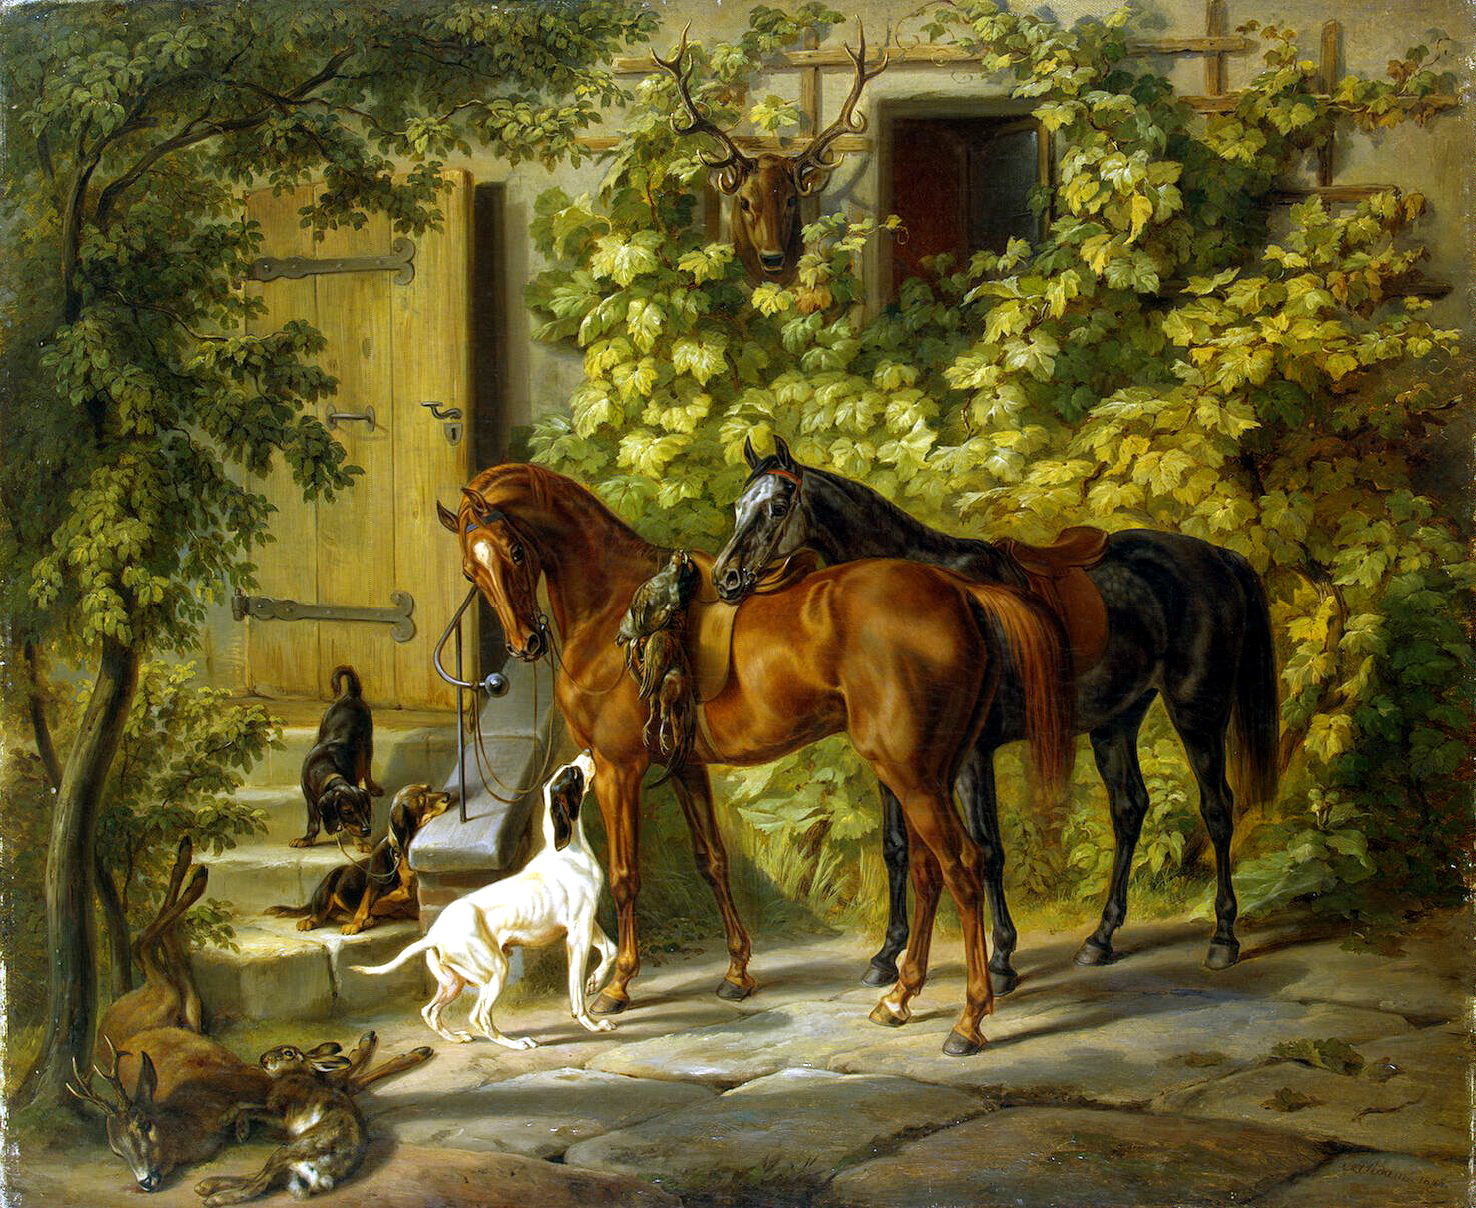 Альбрехт Адам. "Лошади у крыльца". 1843. Эрмитаж, Санкт-Петербург.